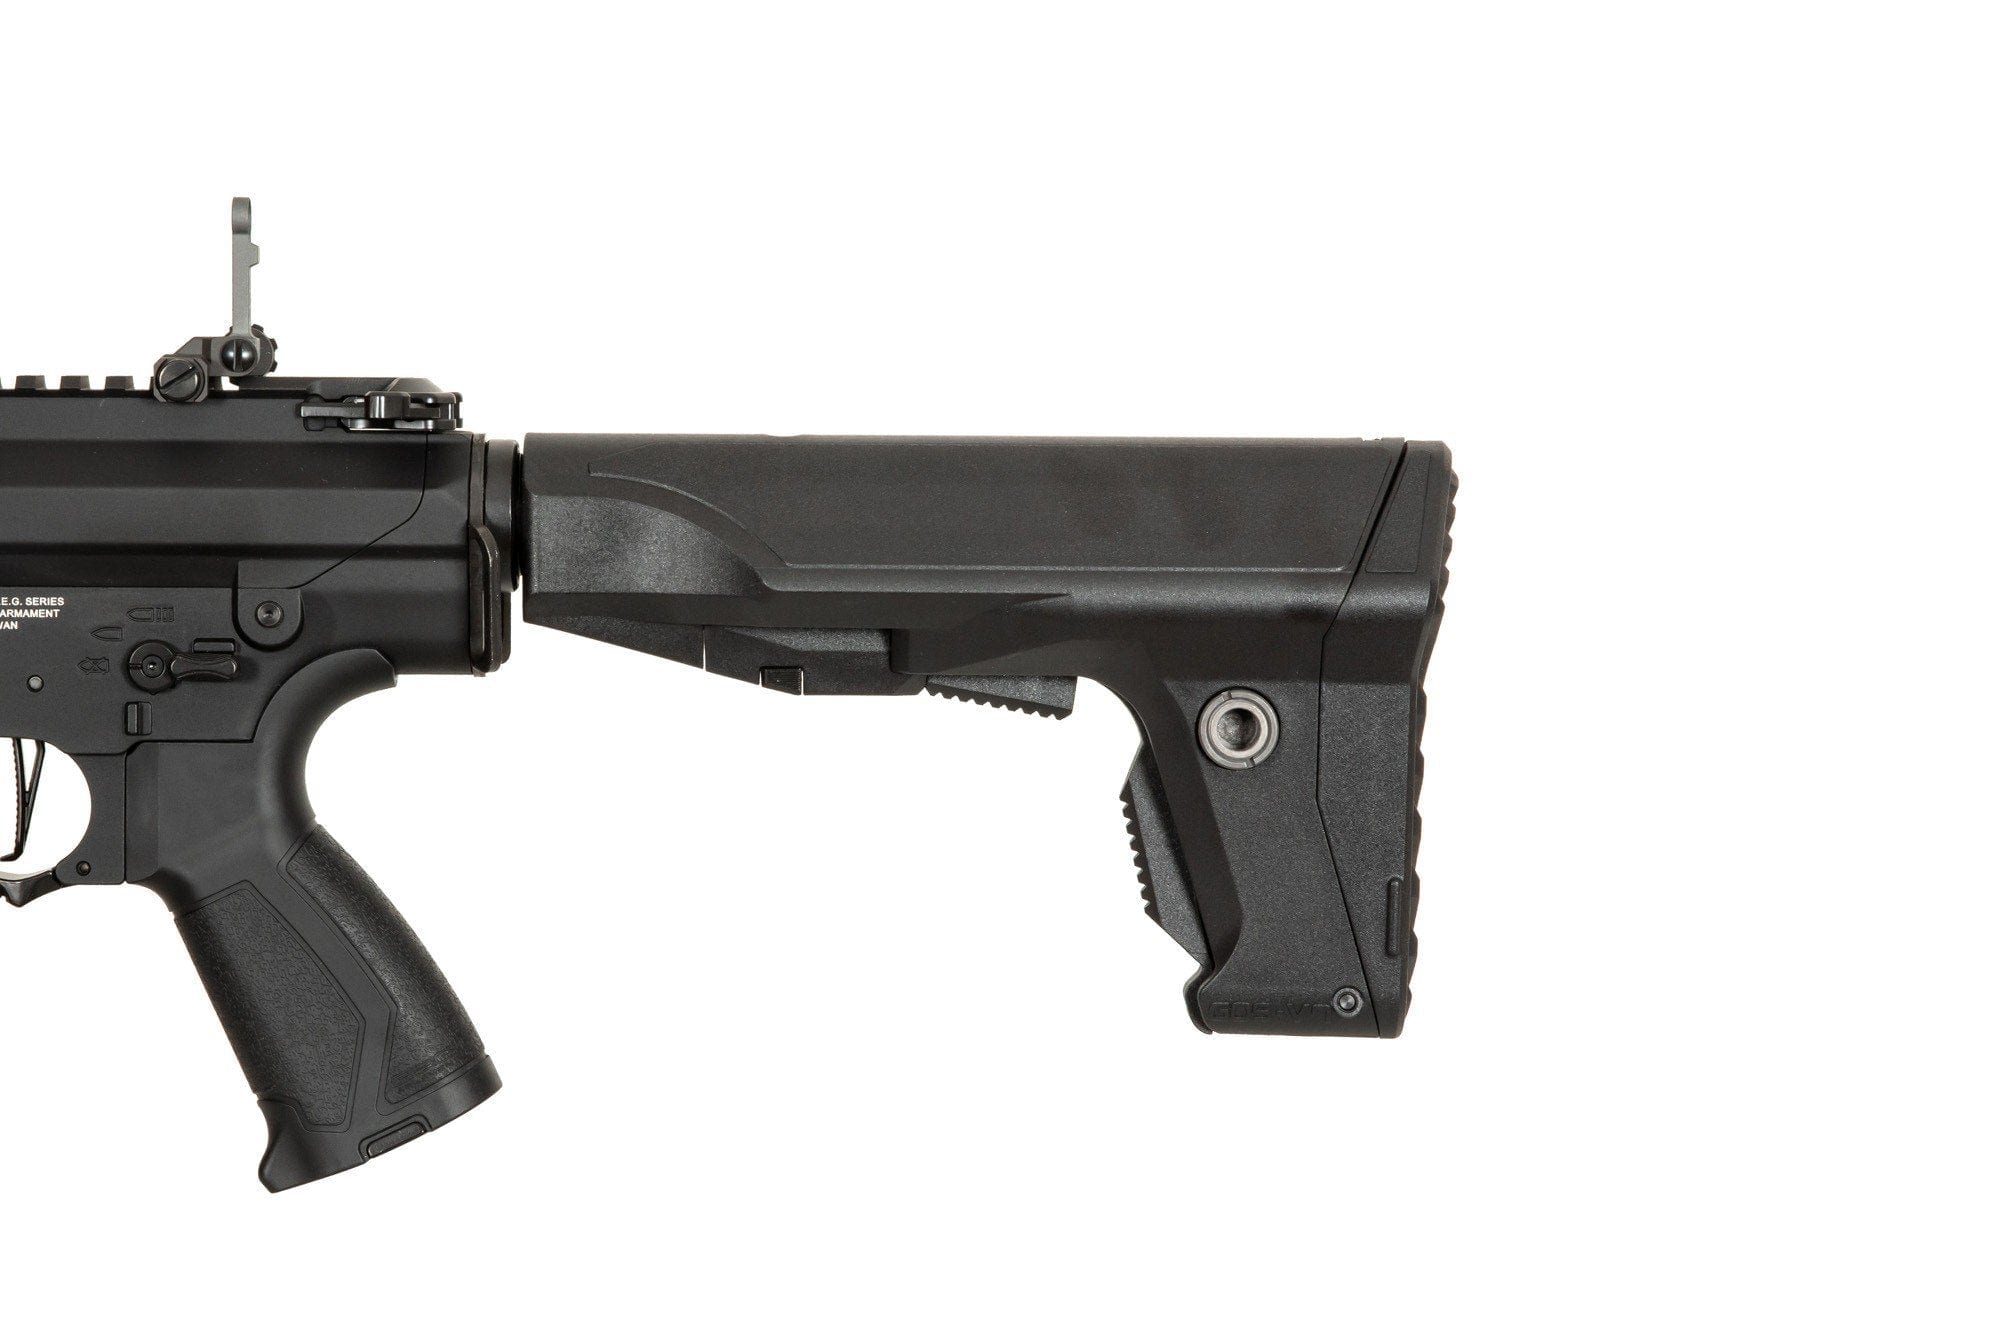 TR16 SBR 308 Mk1 carbine replica by G&G on Airsoft Mania Europe